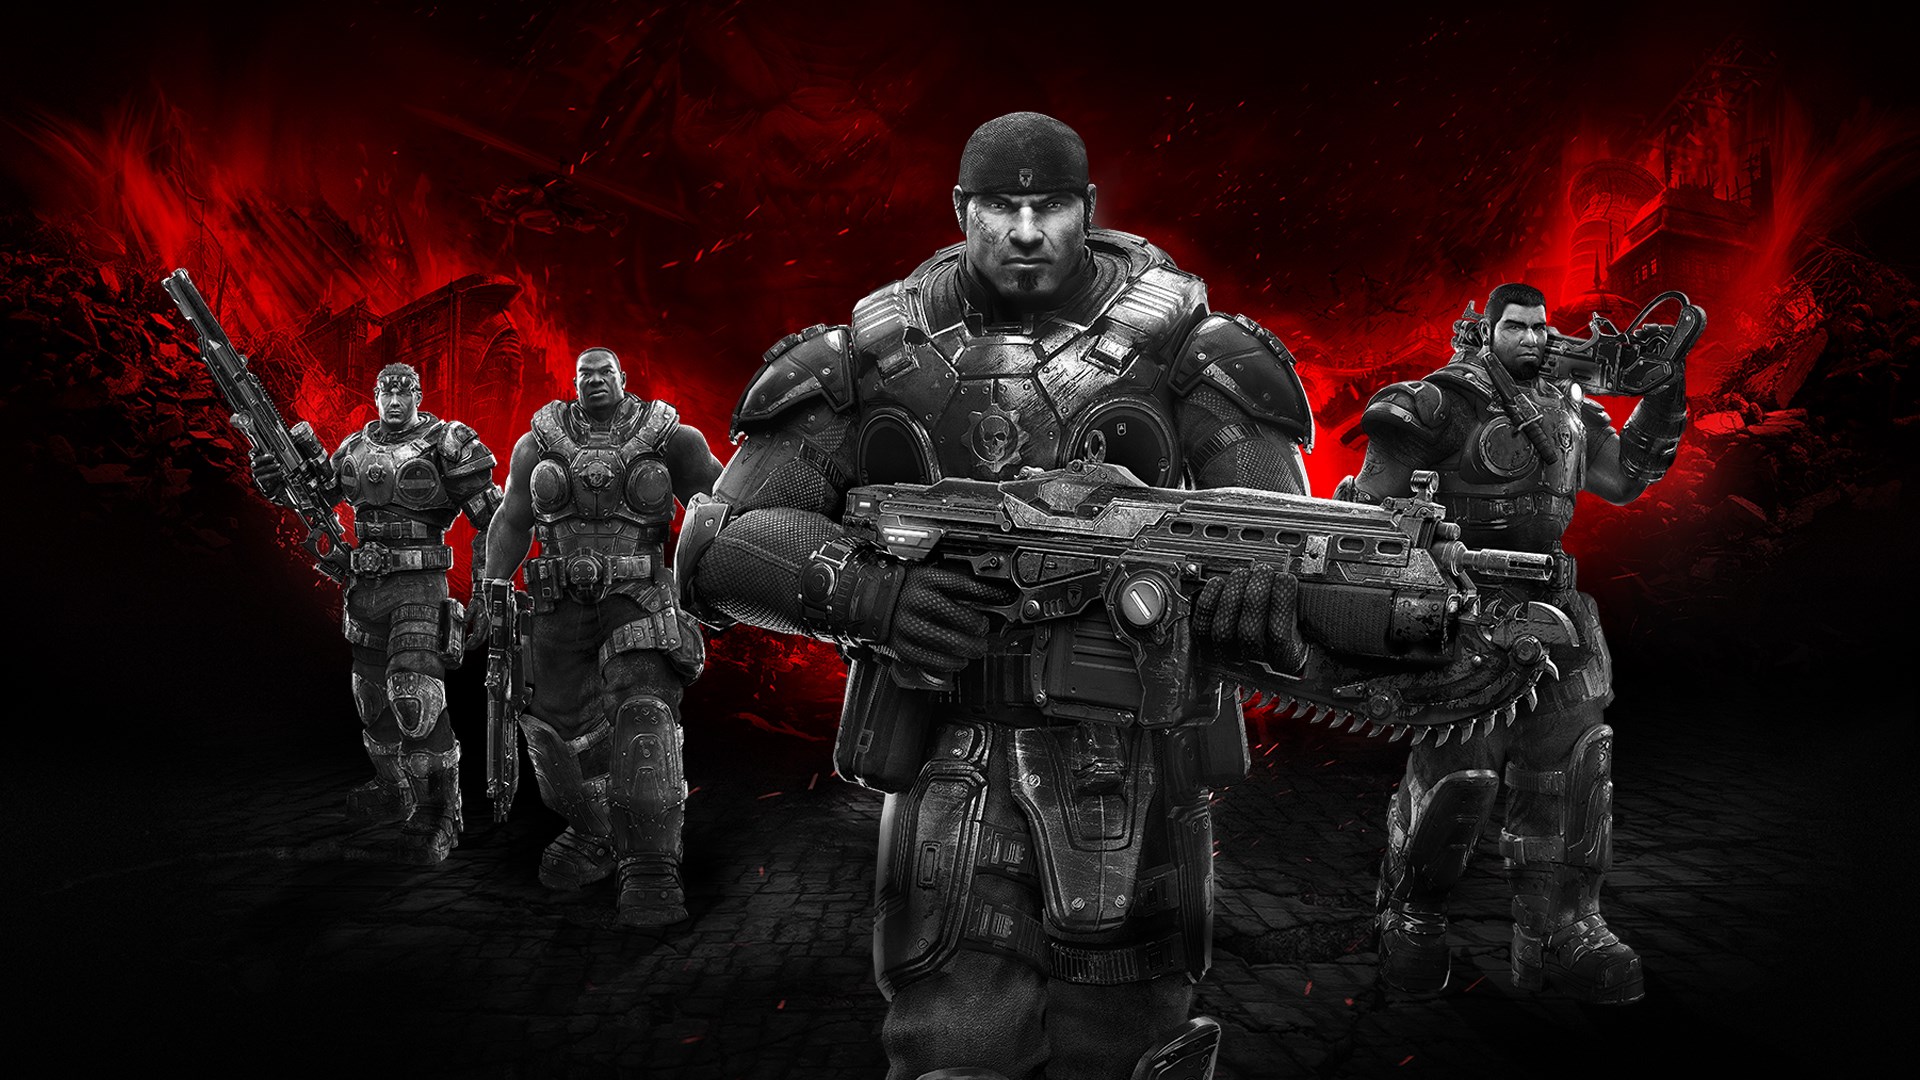 Jogar Gears of War 4  Xbox Cloud Gaming (Beta) em